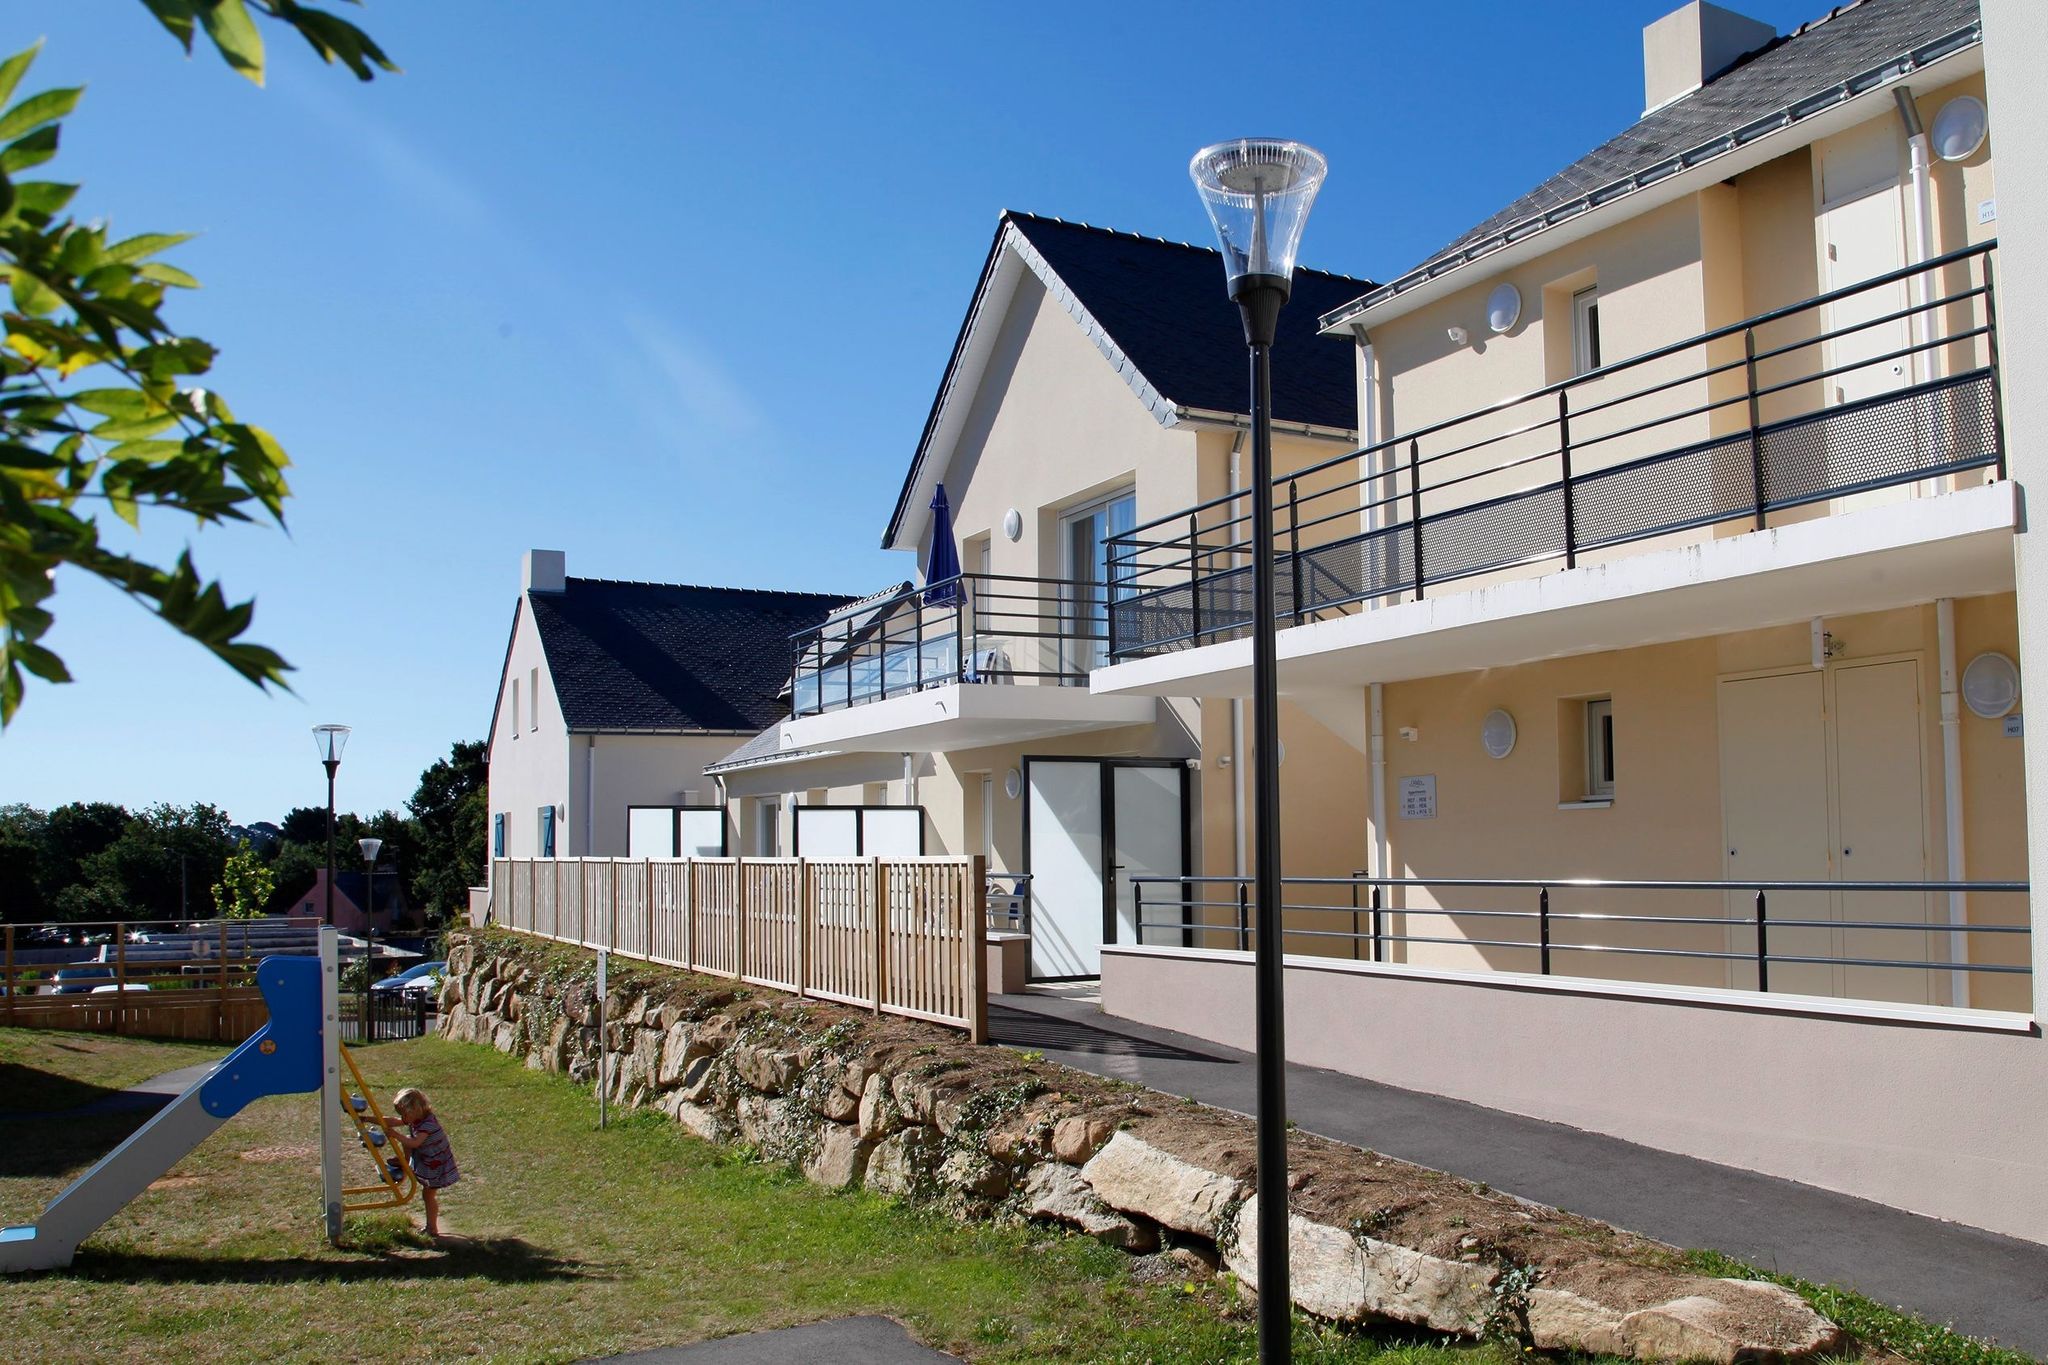 Moderne Wohnung in der Nähe des Golfe de Morbihan in der Südbretagne